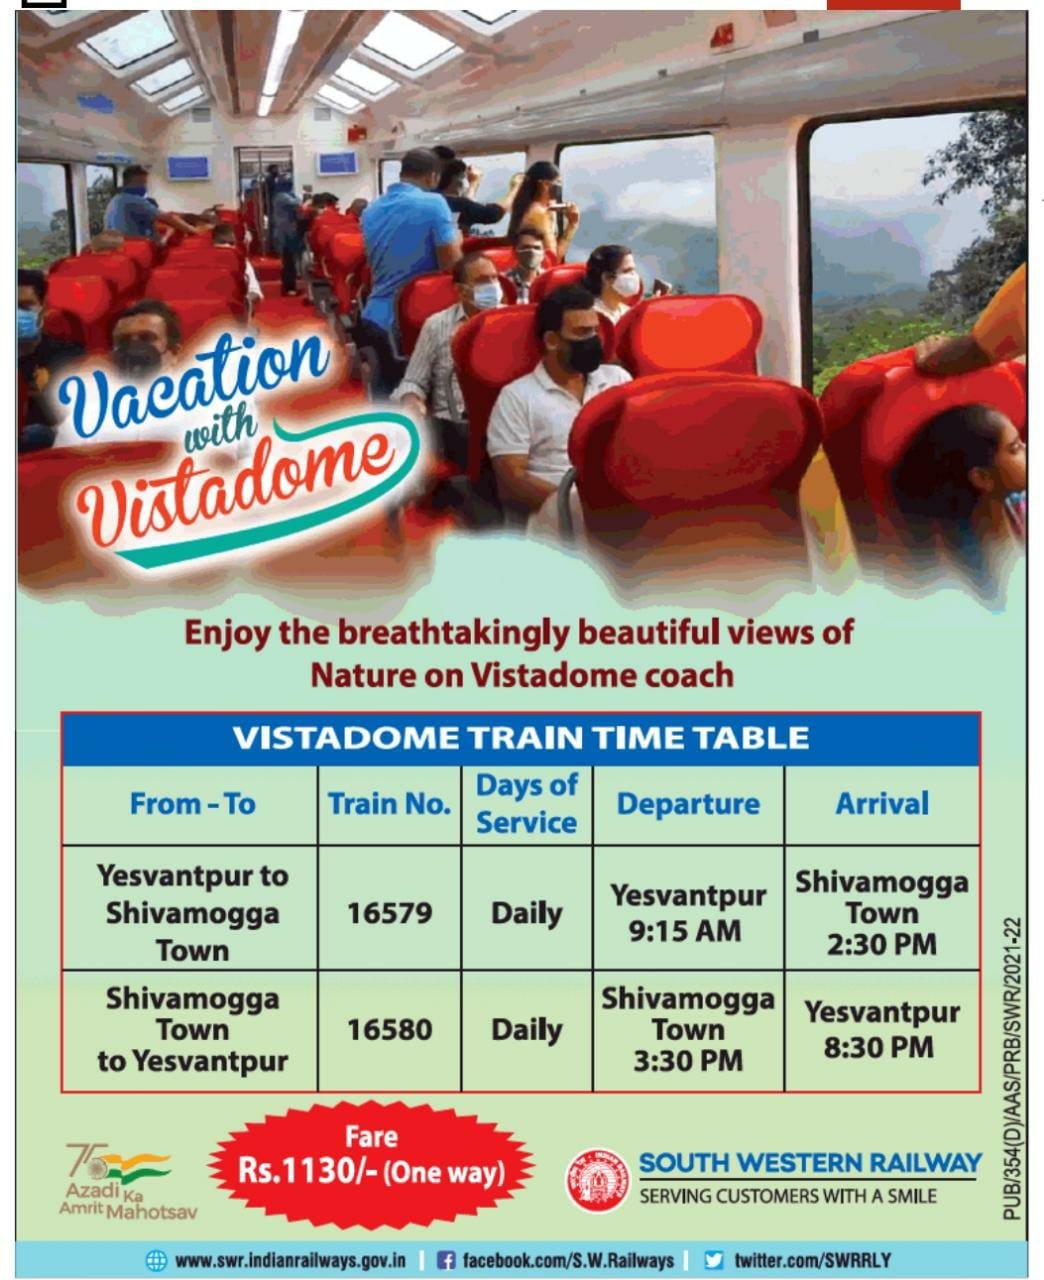 South Western Railway introduced Vistadome coach between Bengaluru-Shivamogga